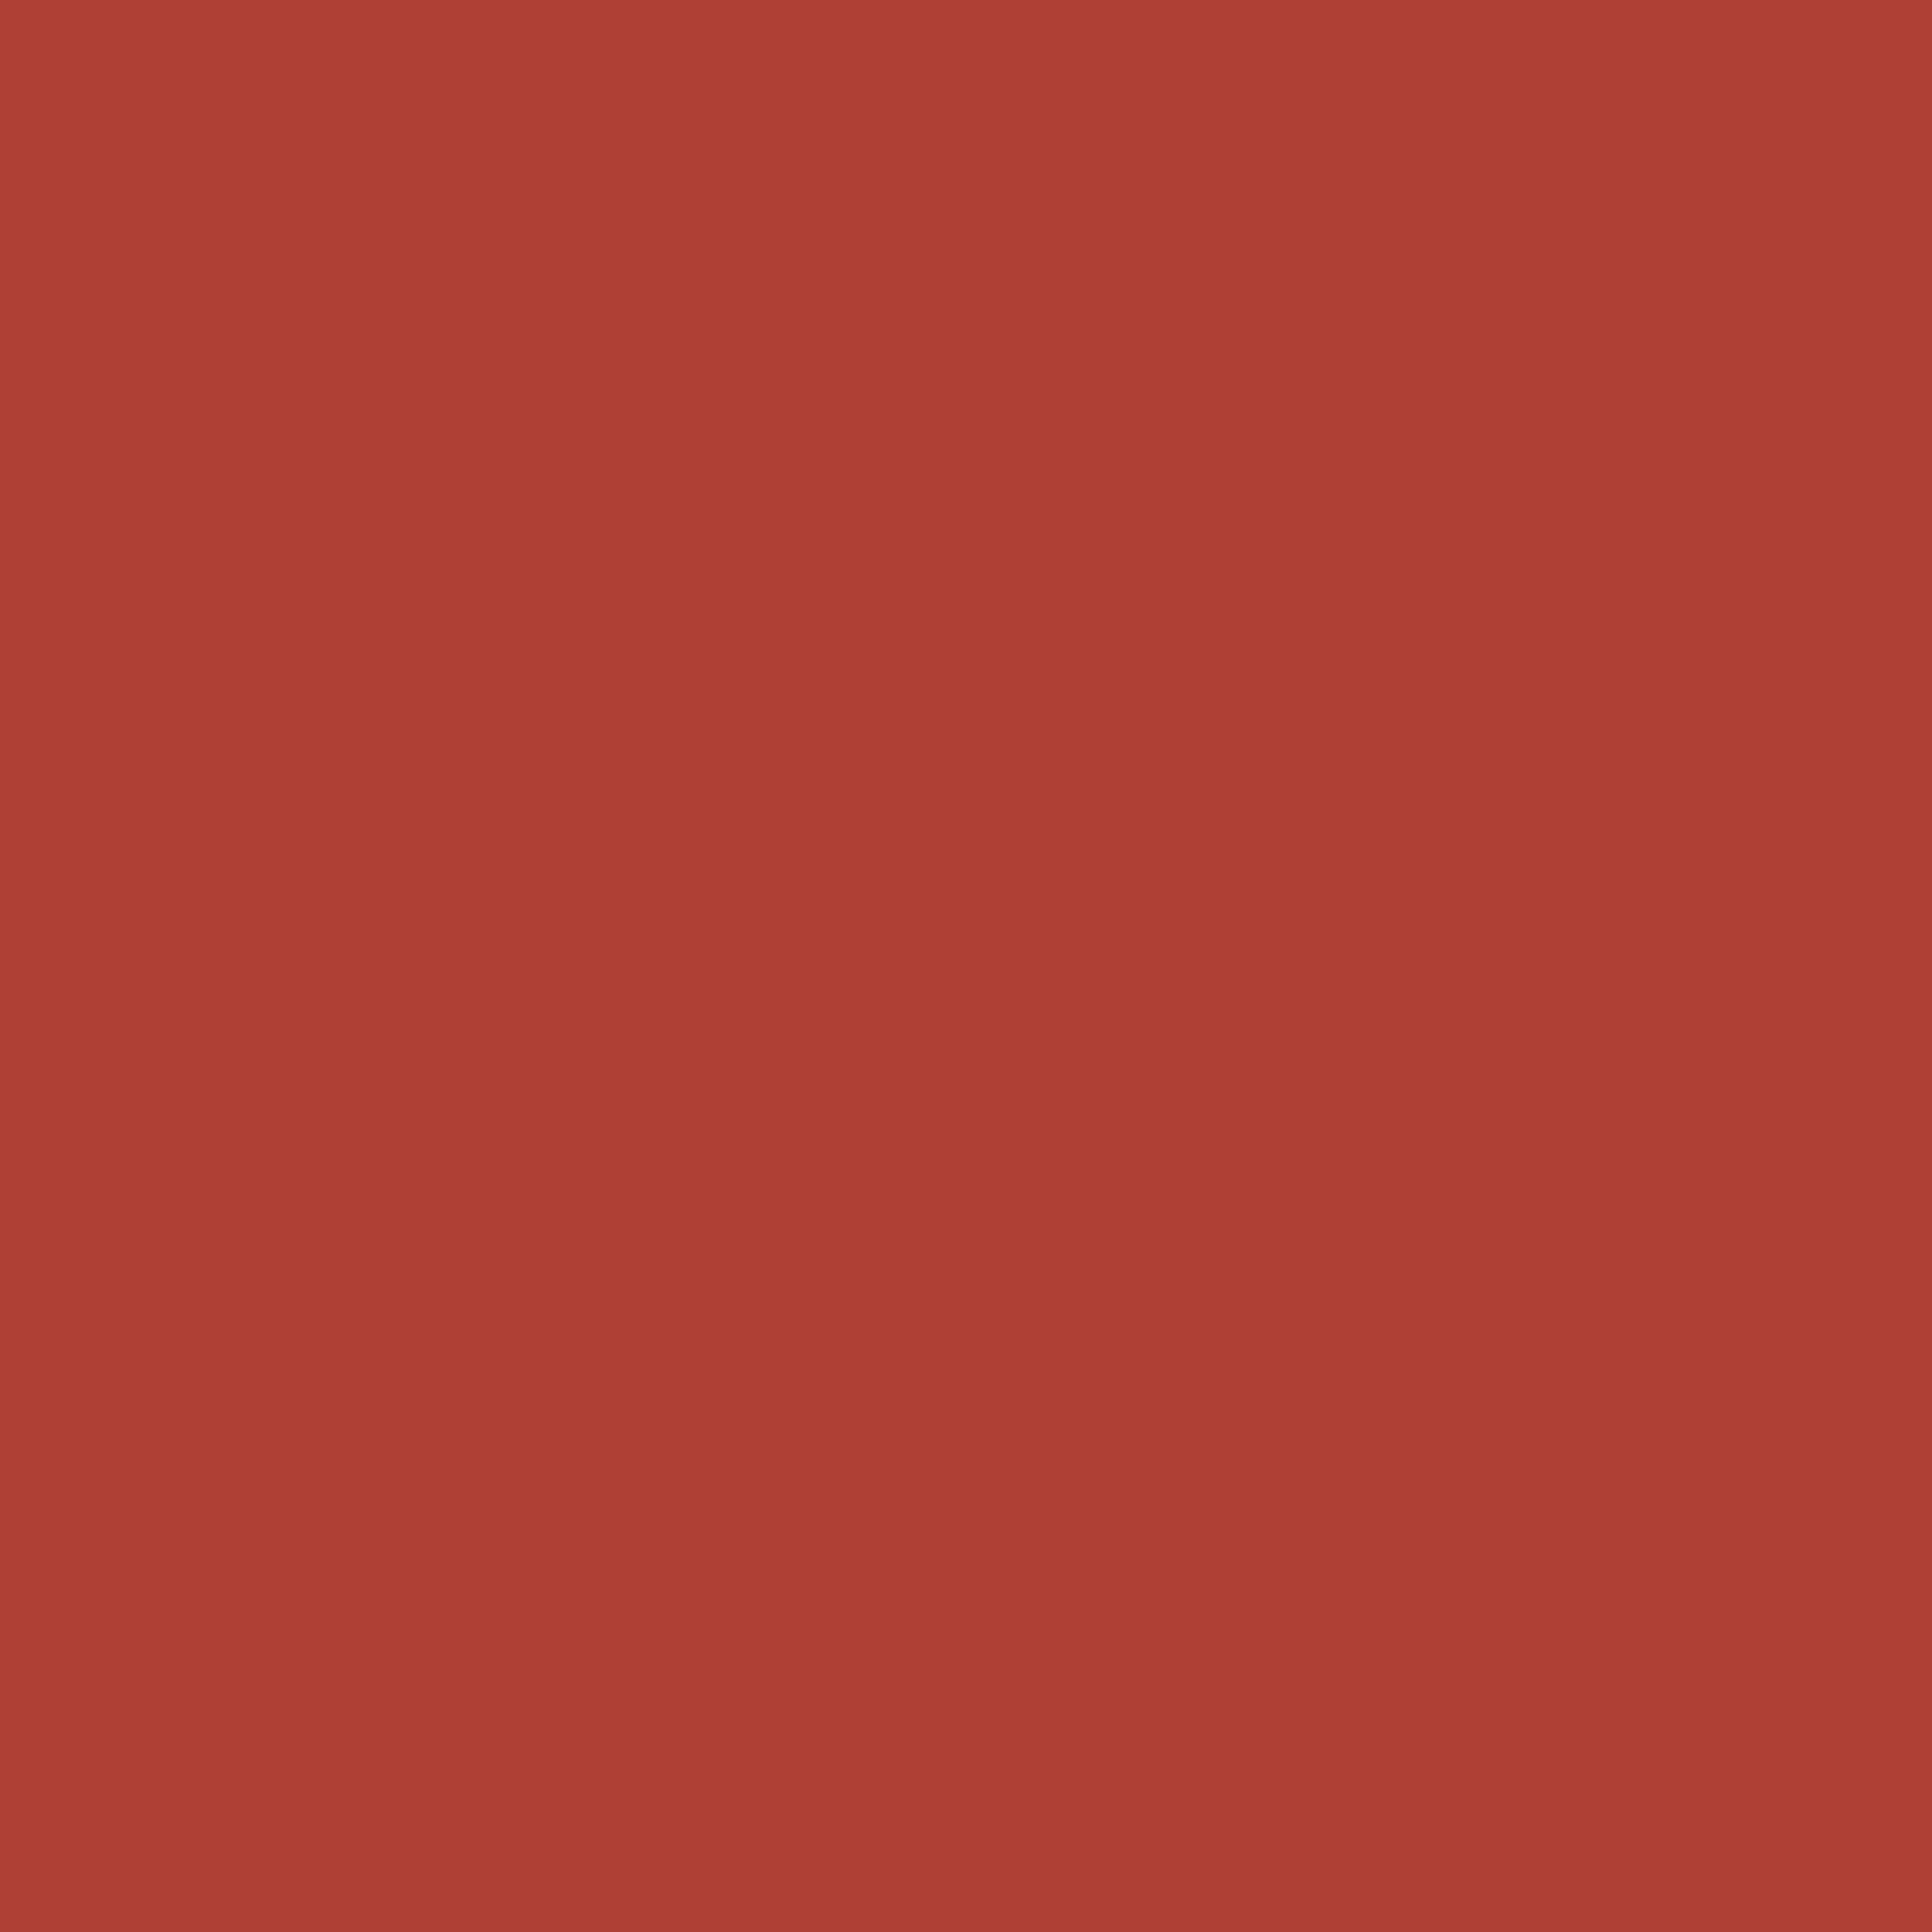 2732x2732 Medium Carmine Solid Color Background